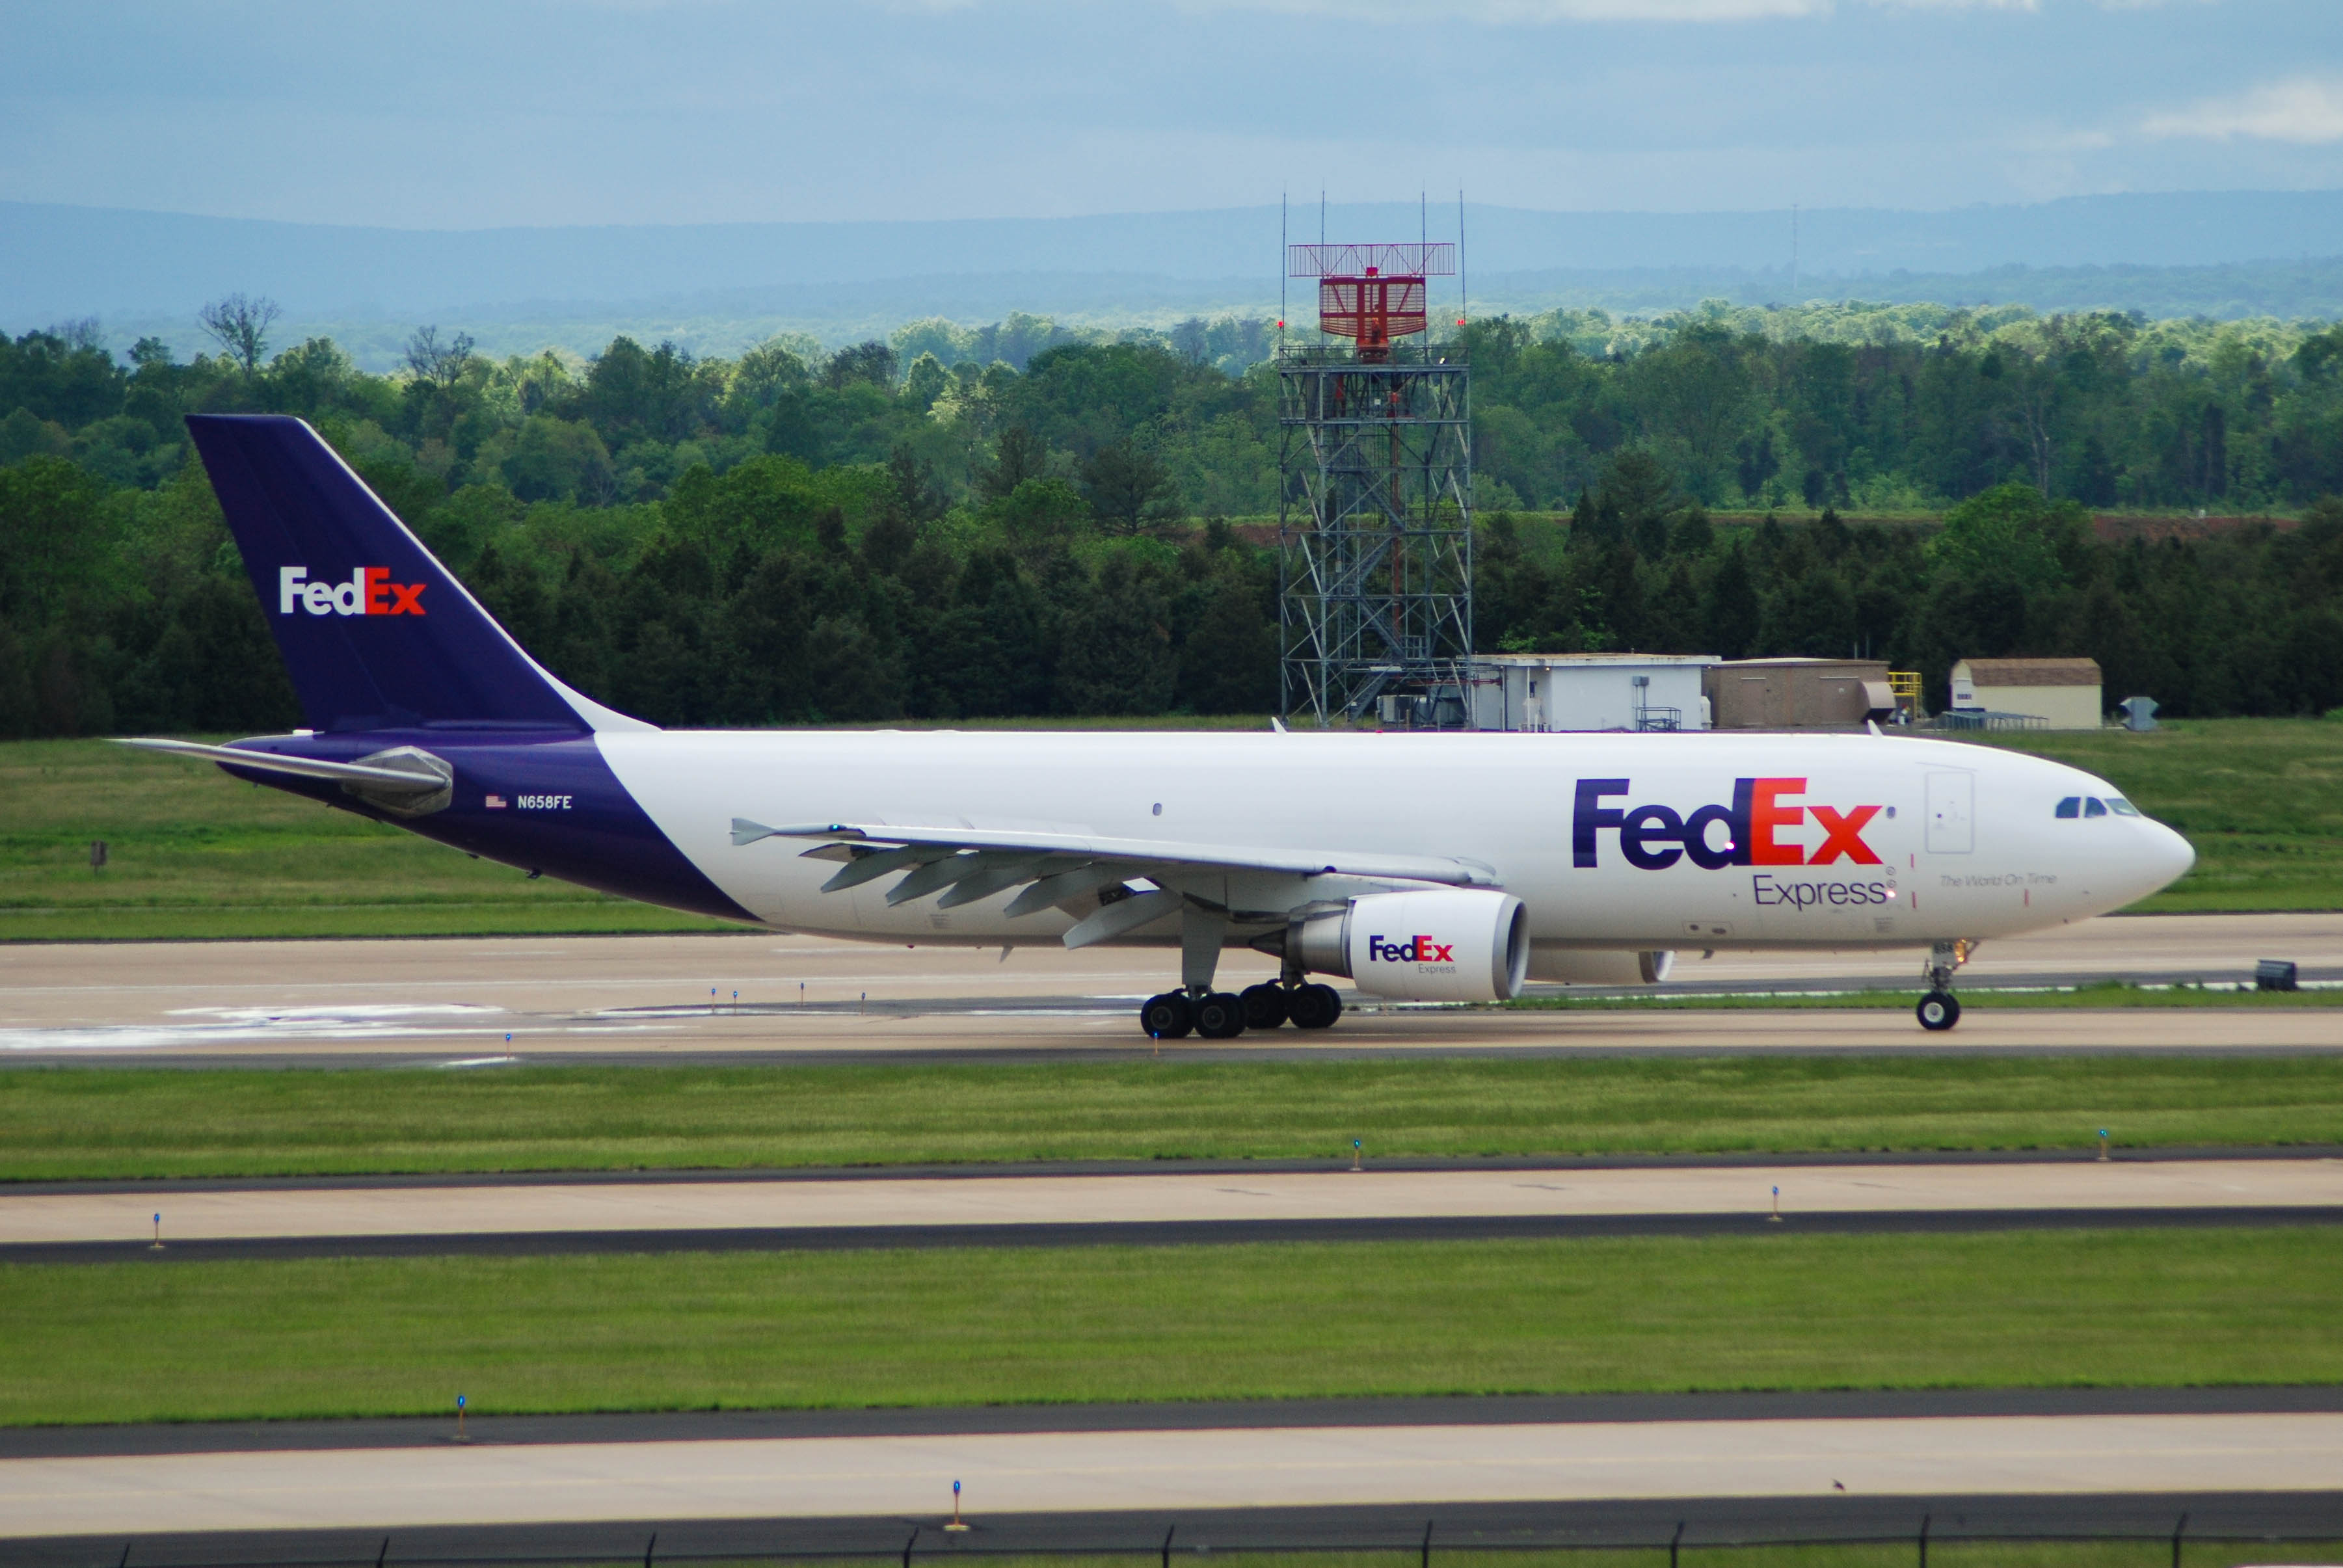 N658FE/N658FE Fedex - Federal Express Airbus A300 Airframe Information - AVSpotters.com